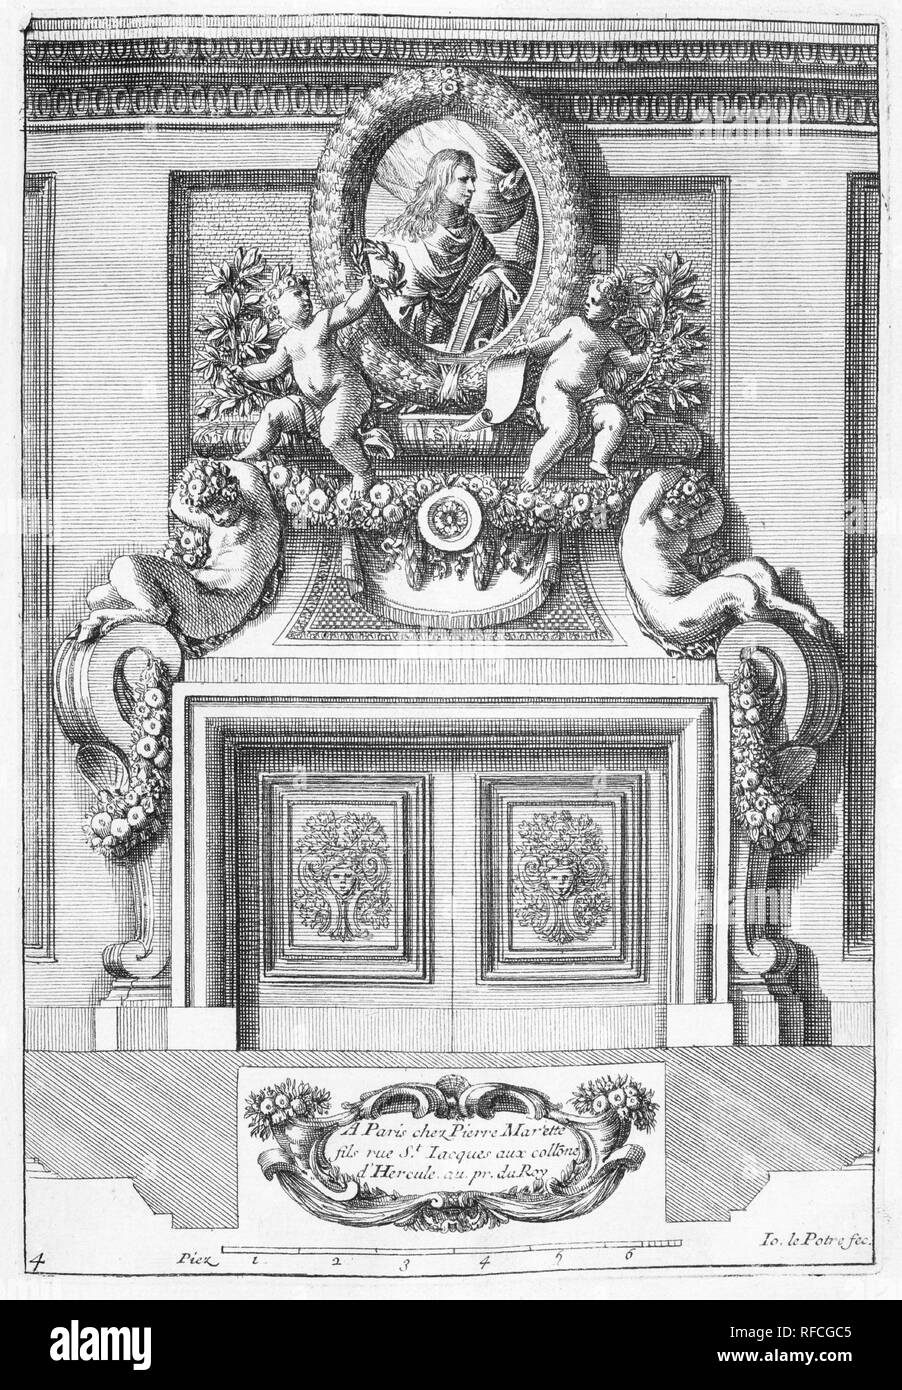 Oeuvres. Vol. I. Artist: Jean Le Pautre (French, Paris 1618-1682 Paris); Pierre Le Pautre (French, ca. 1660-1744). Dimensions: Overall: 14 3/16 x 9 1/16 x 2 1/16 in. (36 x 23 x 5.3 cm). Published in: Paris. Publisher: Nicolas Langlois (French, Paris 1640-1703); Jean I Leblond (French, ca. 1590-1666 Paris); Pierre Mariette le fils (French, Paris 1634-1716 Paris); Jean Mariette (French, Saint Benoît 1660-1742 Paris); M. Daigremont (French, active ca.1670-1700); Antoine Trouvain (French, 1656-1708); Jacques II Chereau (French, Blois 1688-1776 Paris); Jean II Leblond (French, ca. 1635-1709). Date: Stock Photo